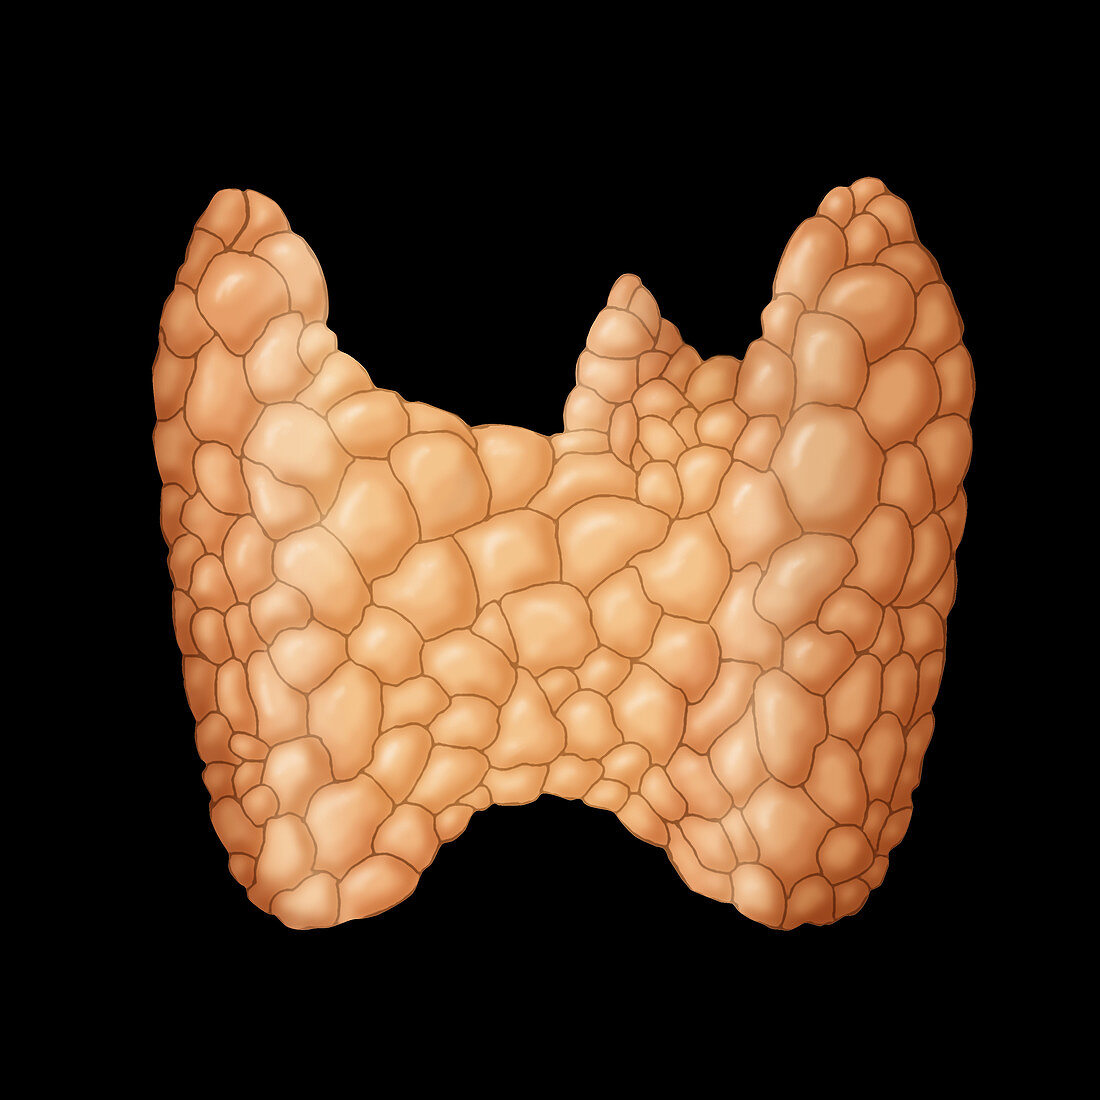 Thyroid Gland,Illustration